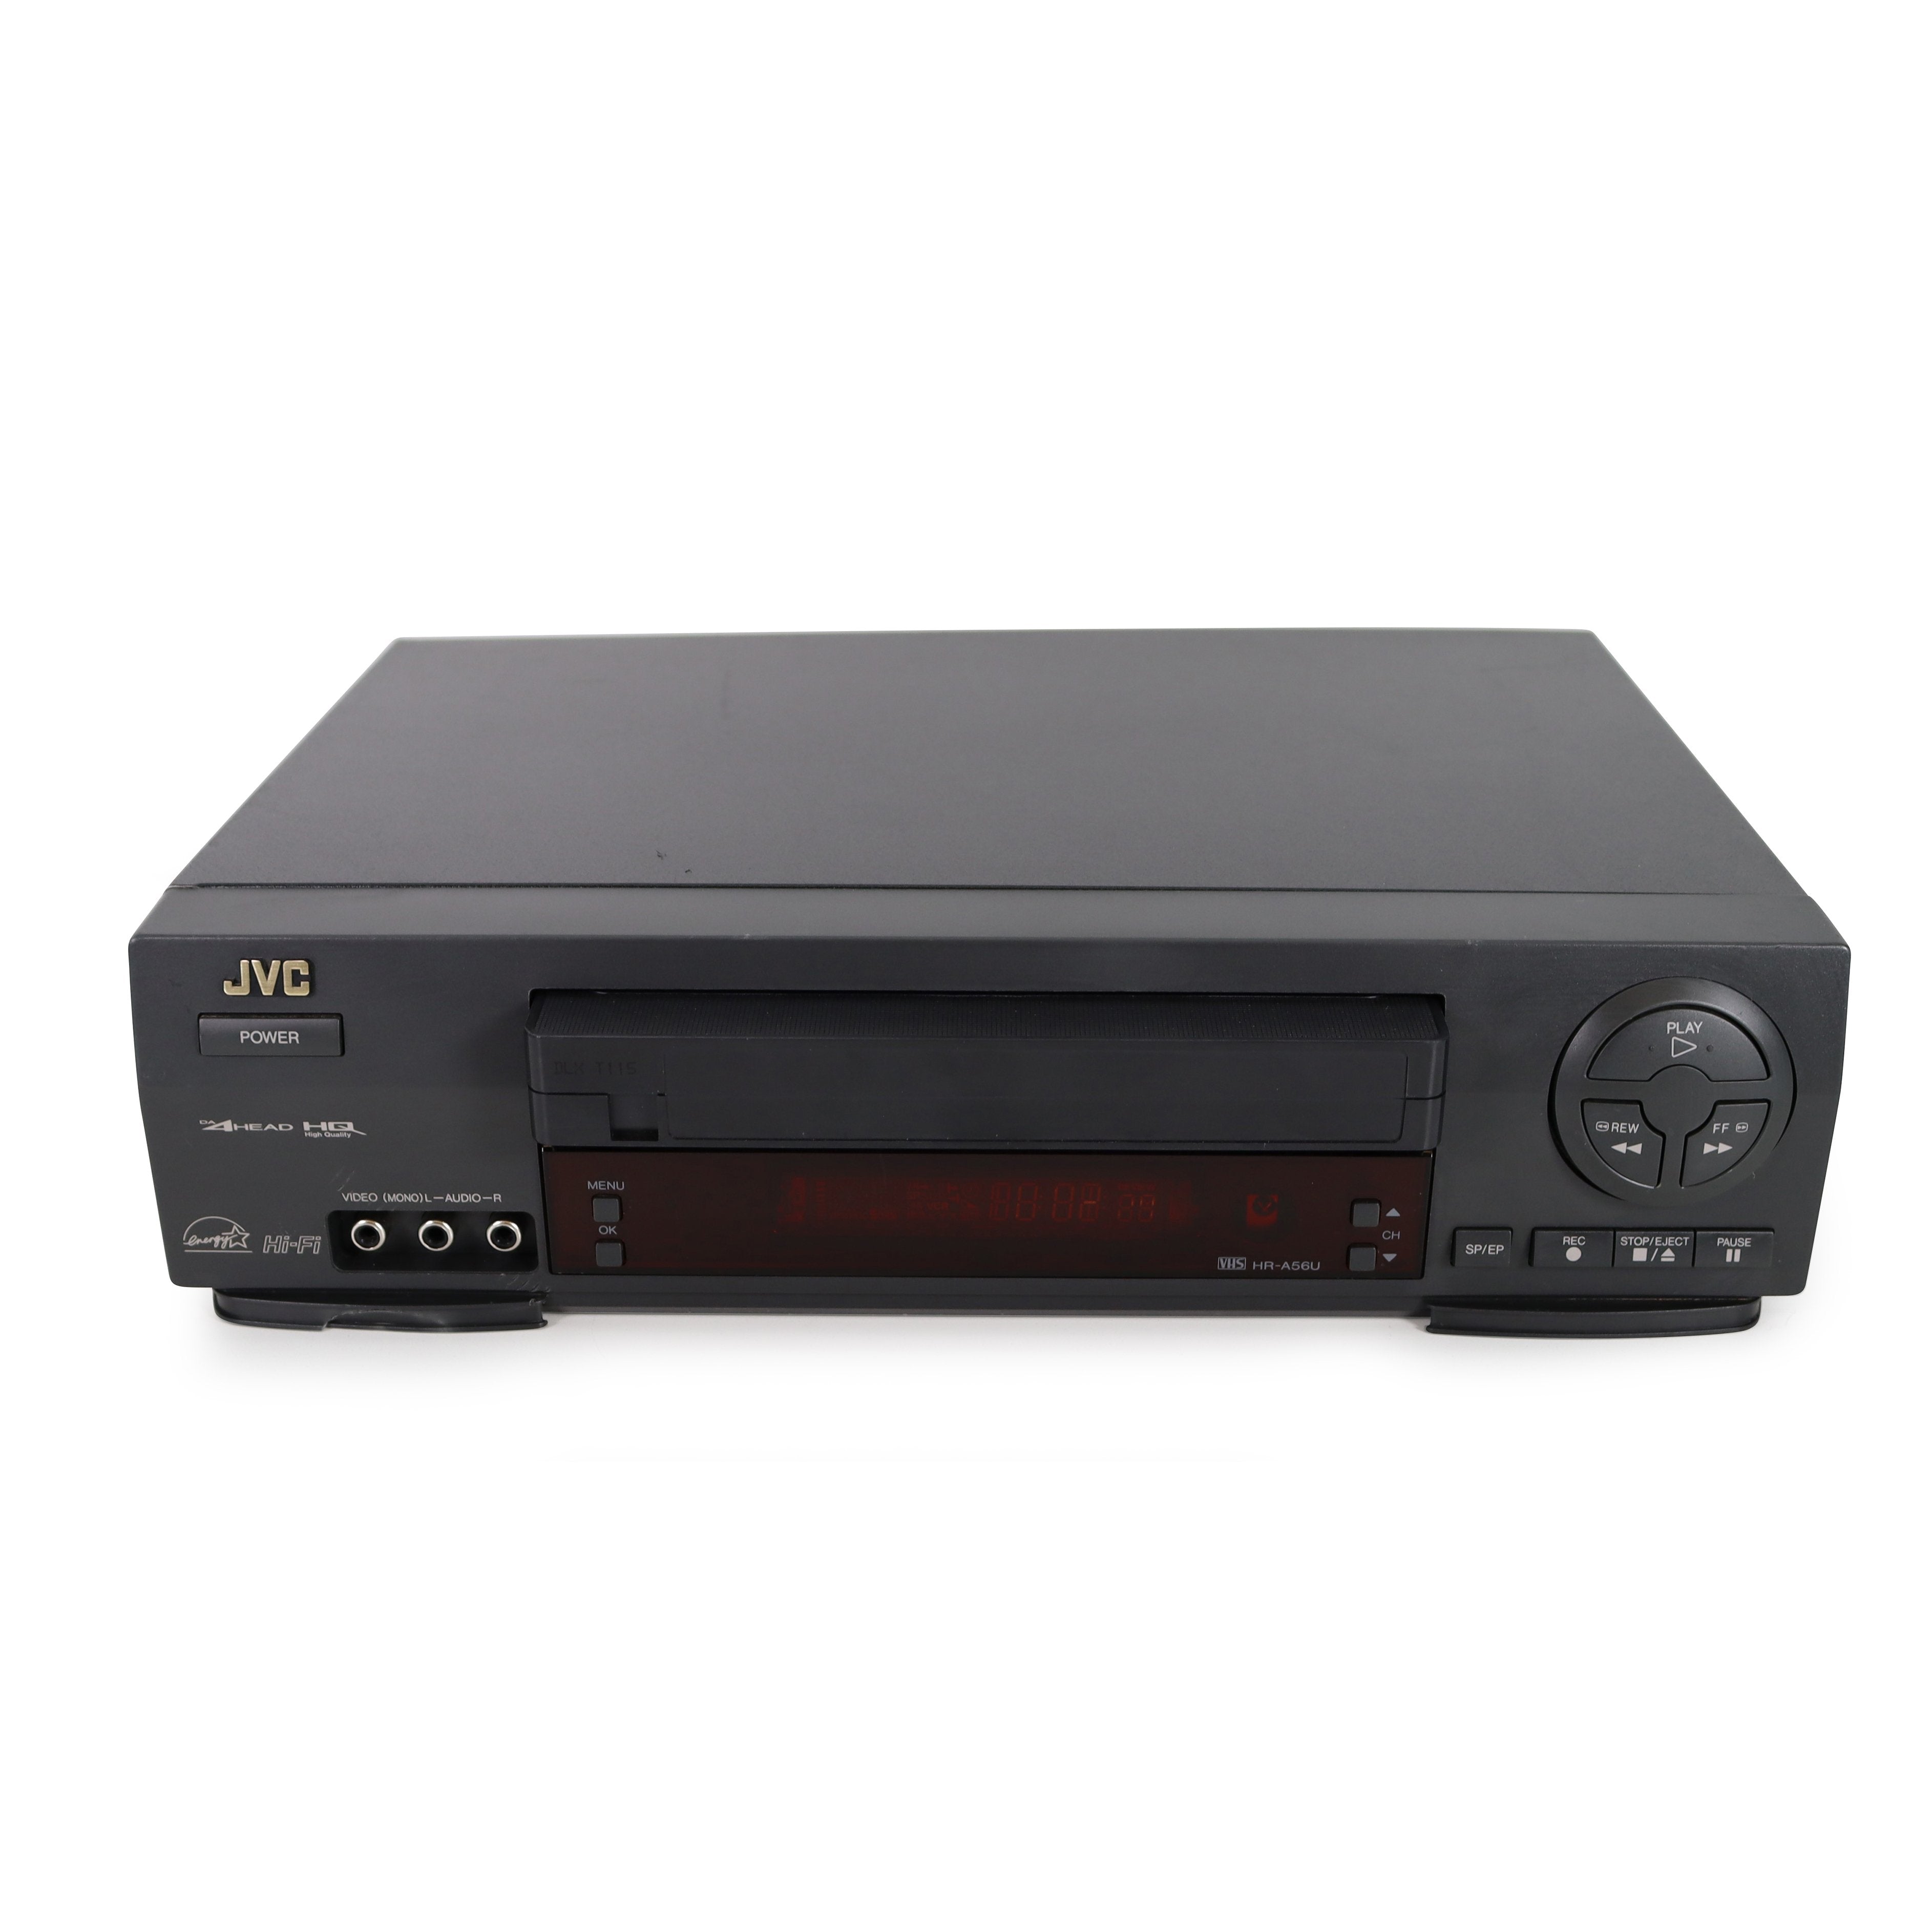 JVC HR-A56U (usado) VCR VHS Reproductor Video Peru